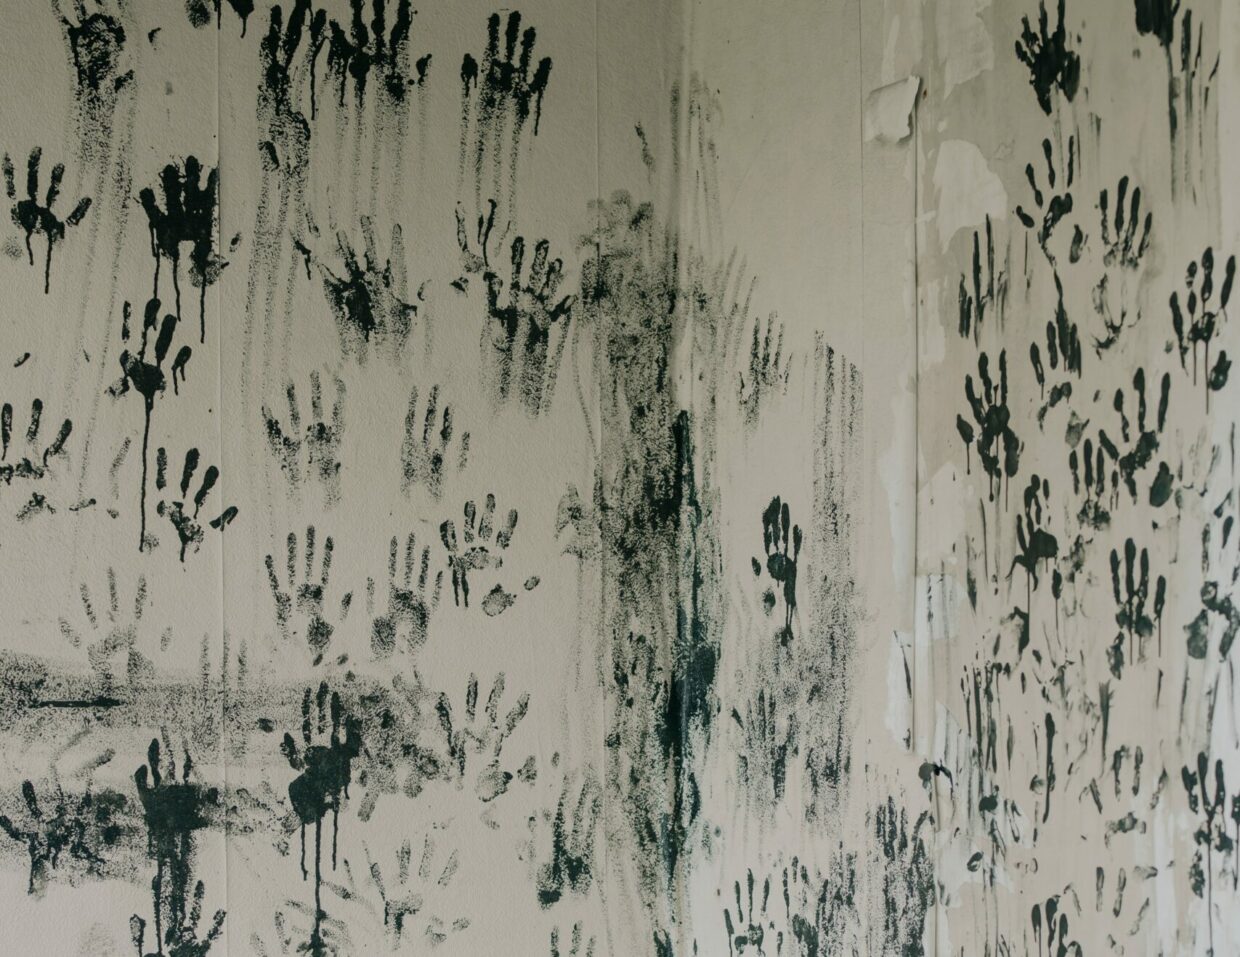 black hand prints on white background